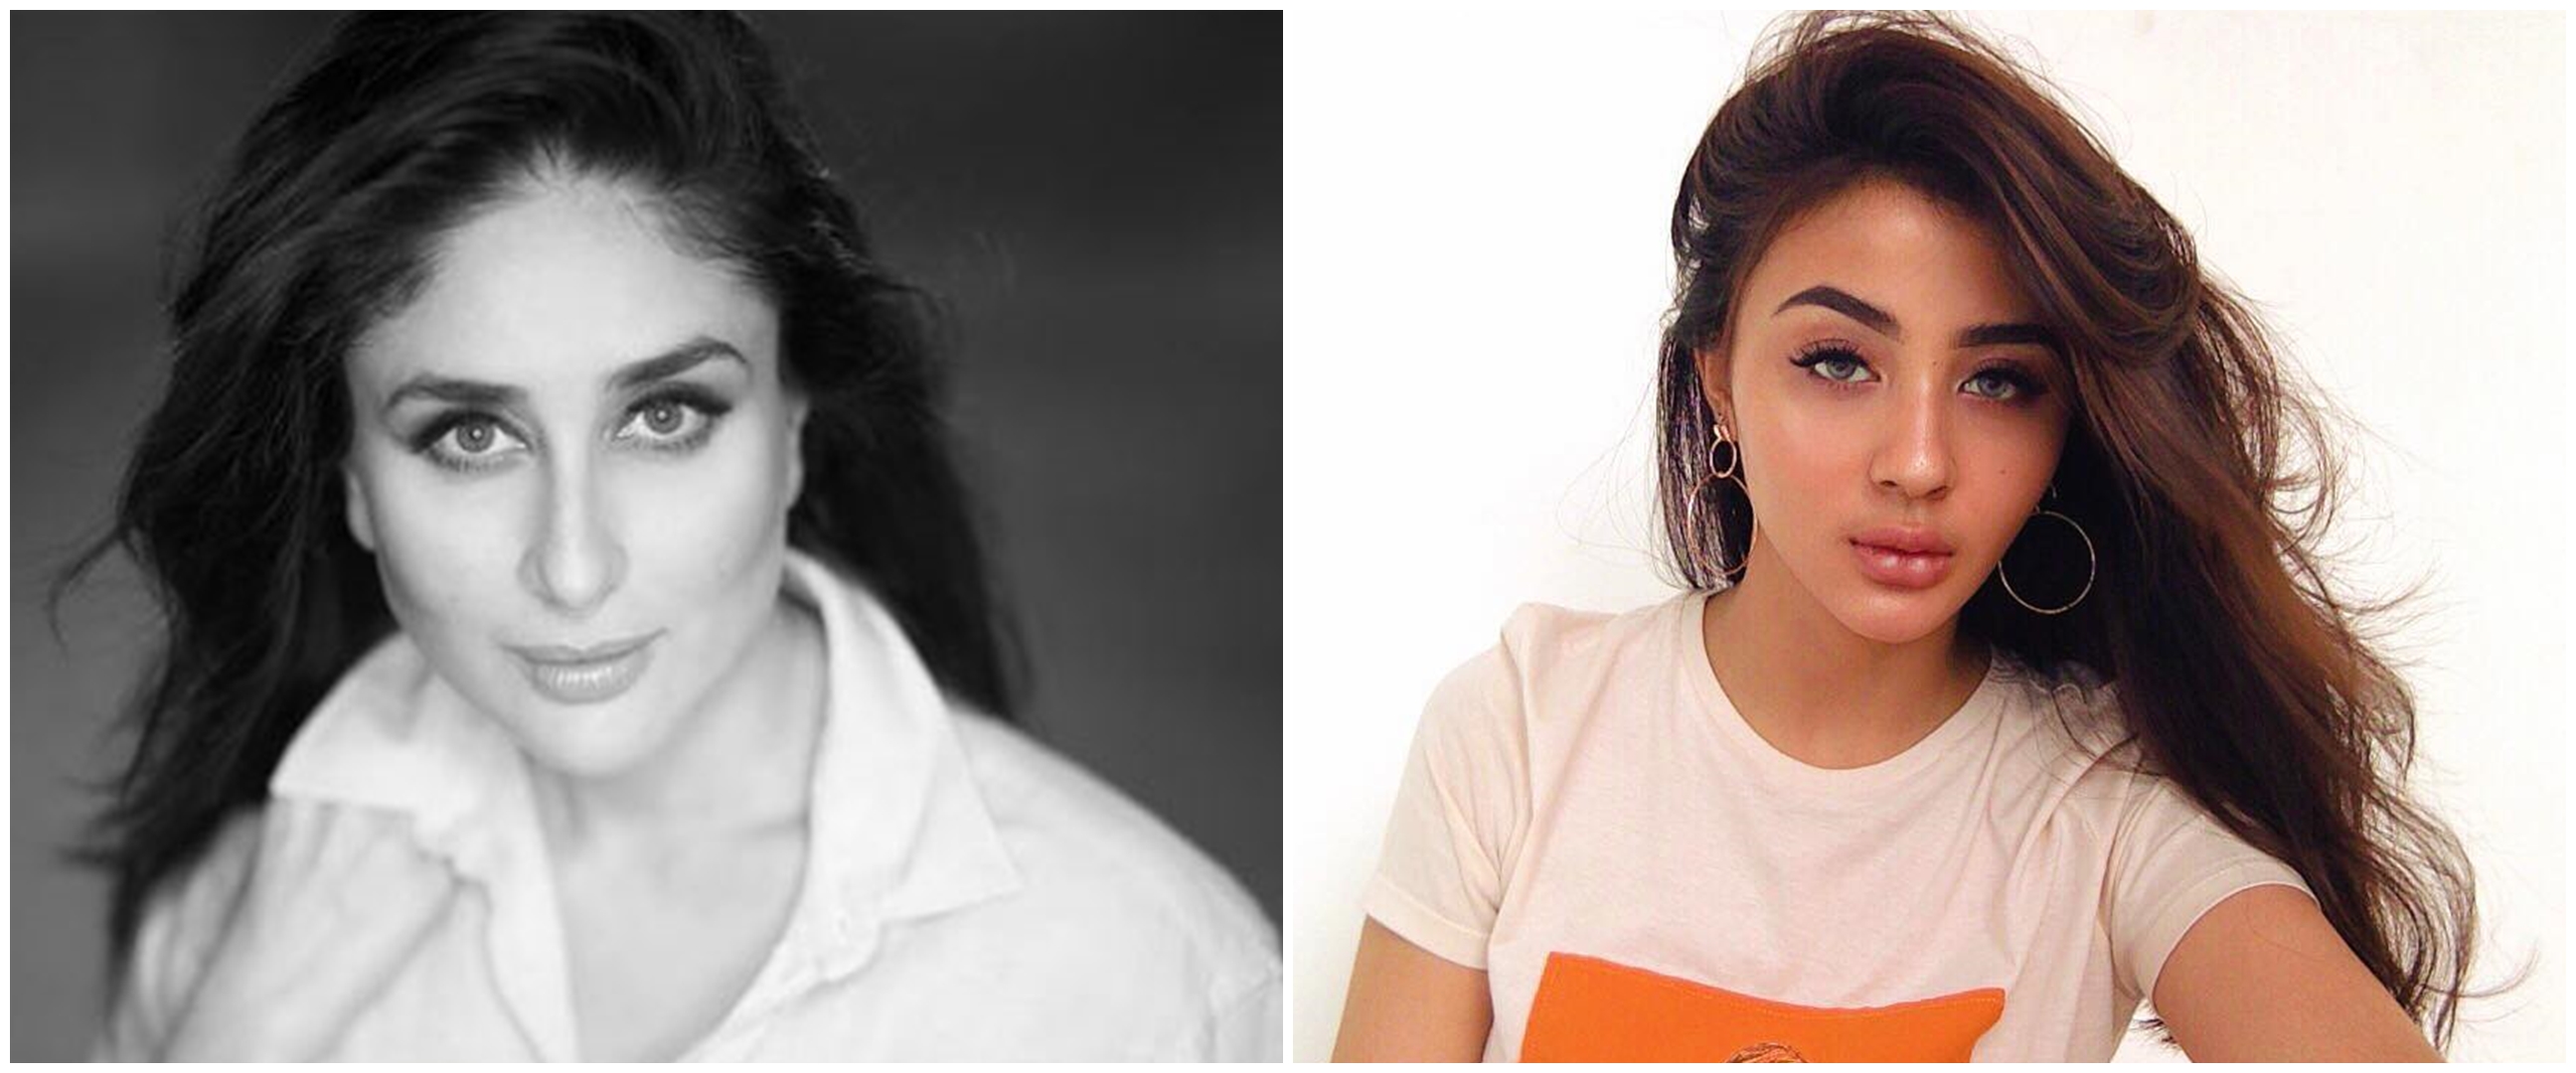 Disebut mirip, intip 10 potret Margin Wieheerm dan Kareena Kapoor